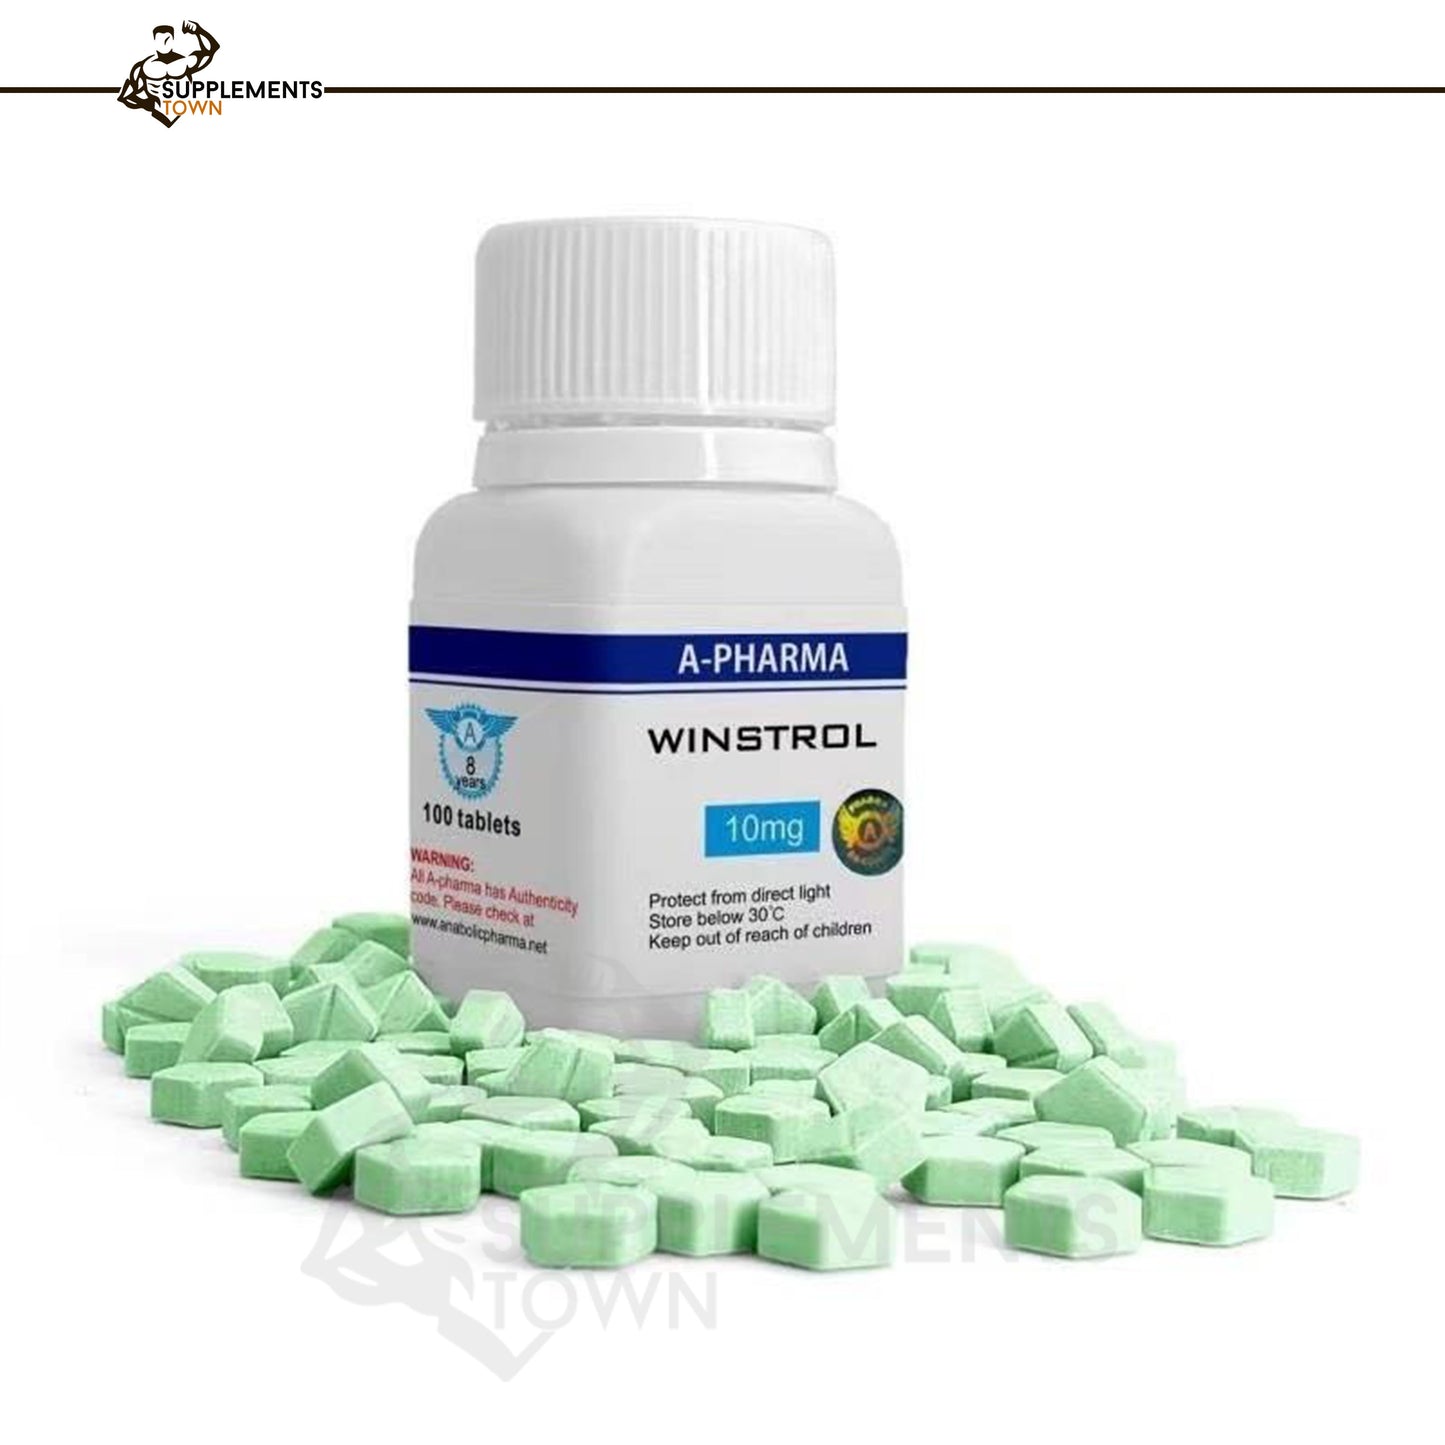 Winstrol 10 mg - 100 tabs By Apharma